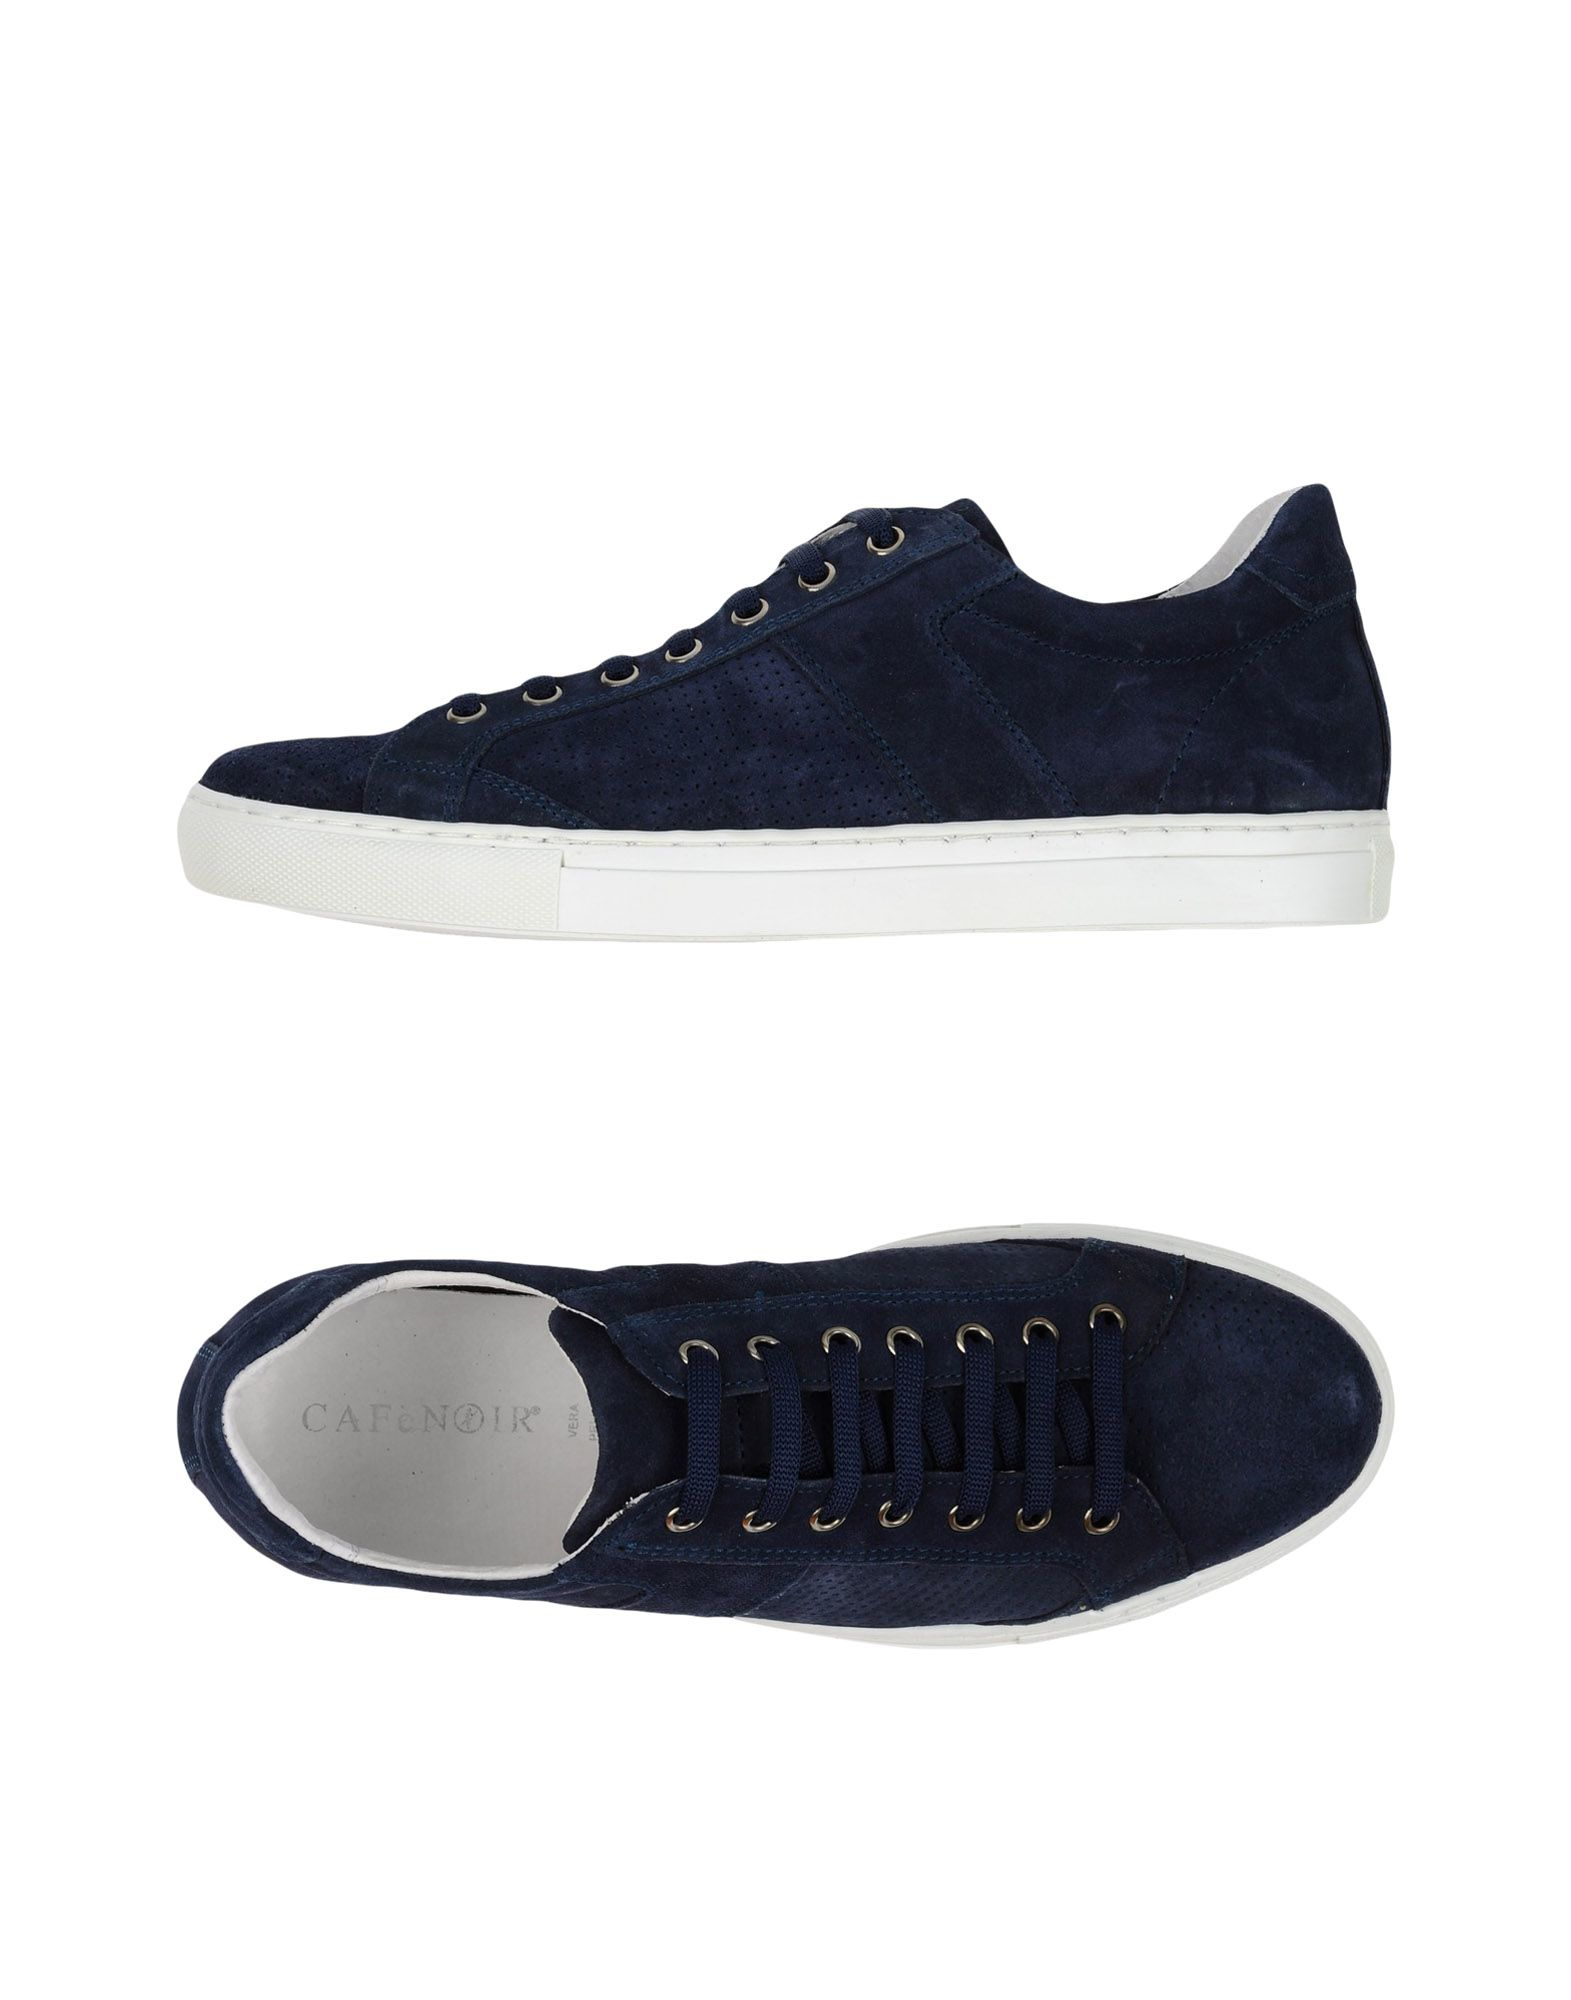 Lyst - Cafenoir Low-tops & Sneakers in Blue for Men